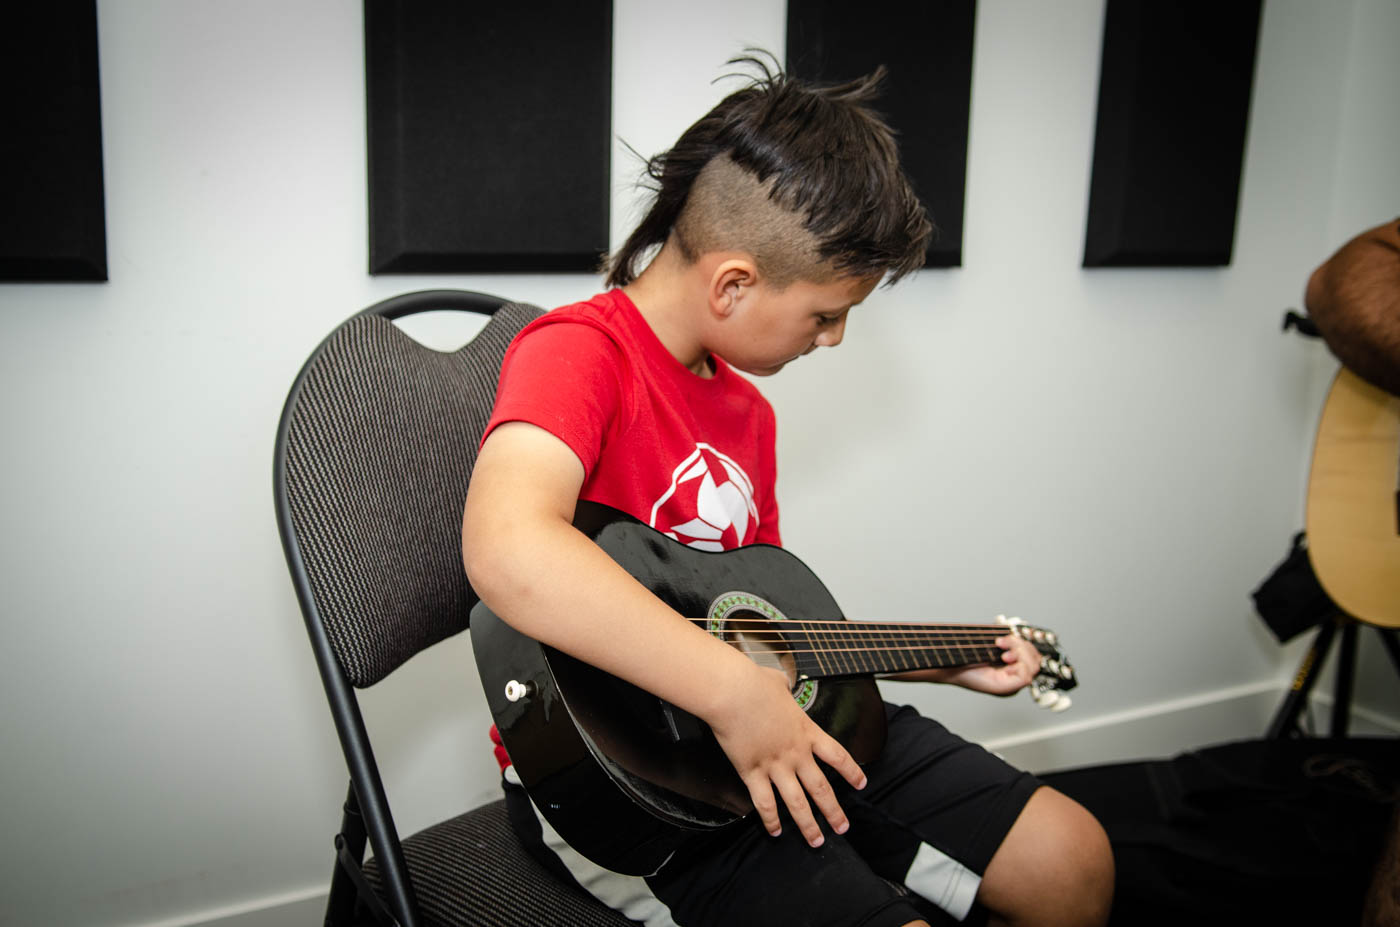 kid in red shirt playing guitar